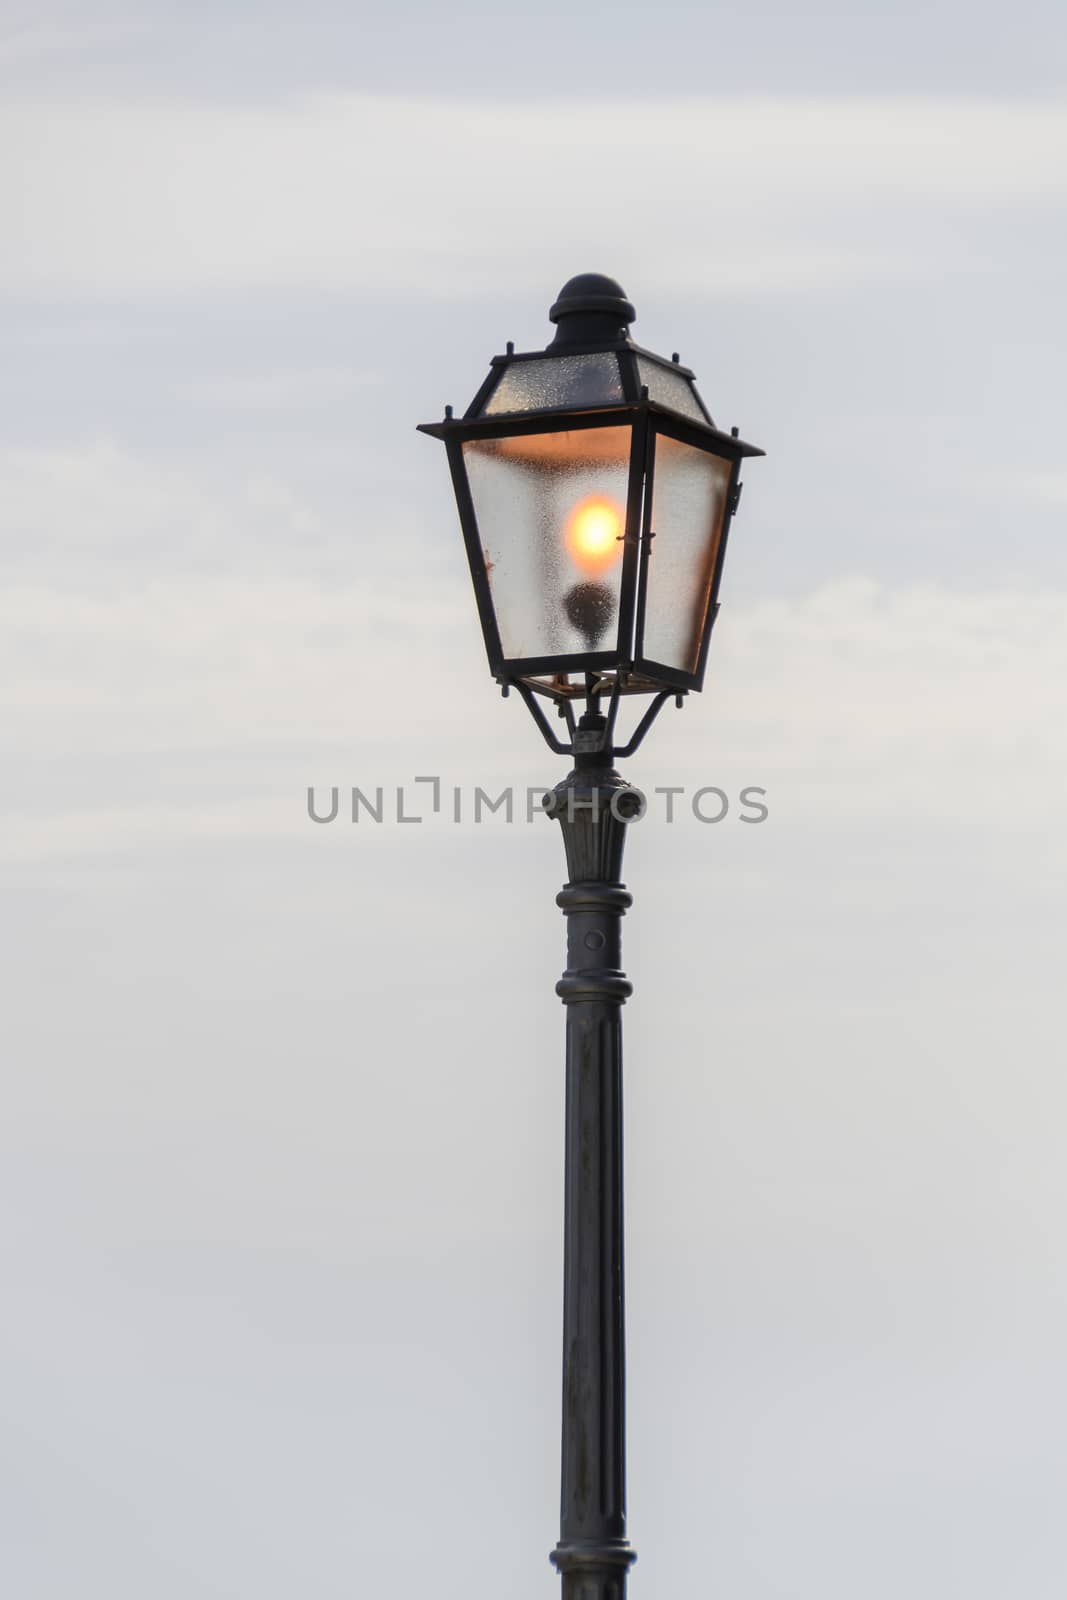 Vintage street lamp / lantern by asafaric